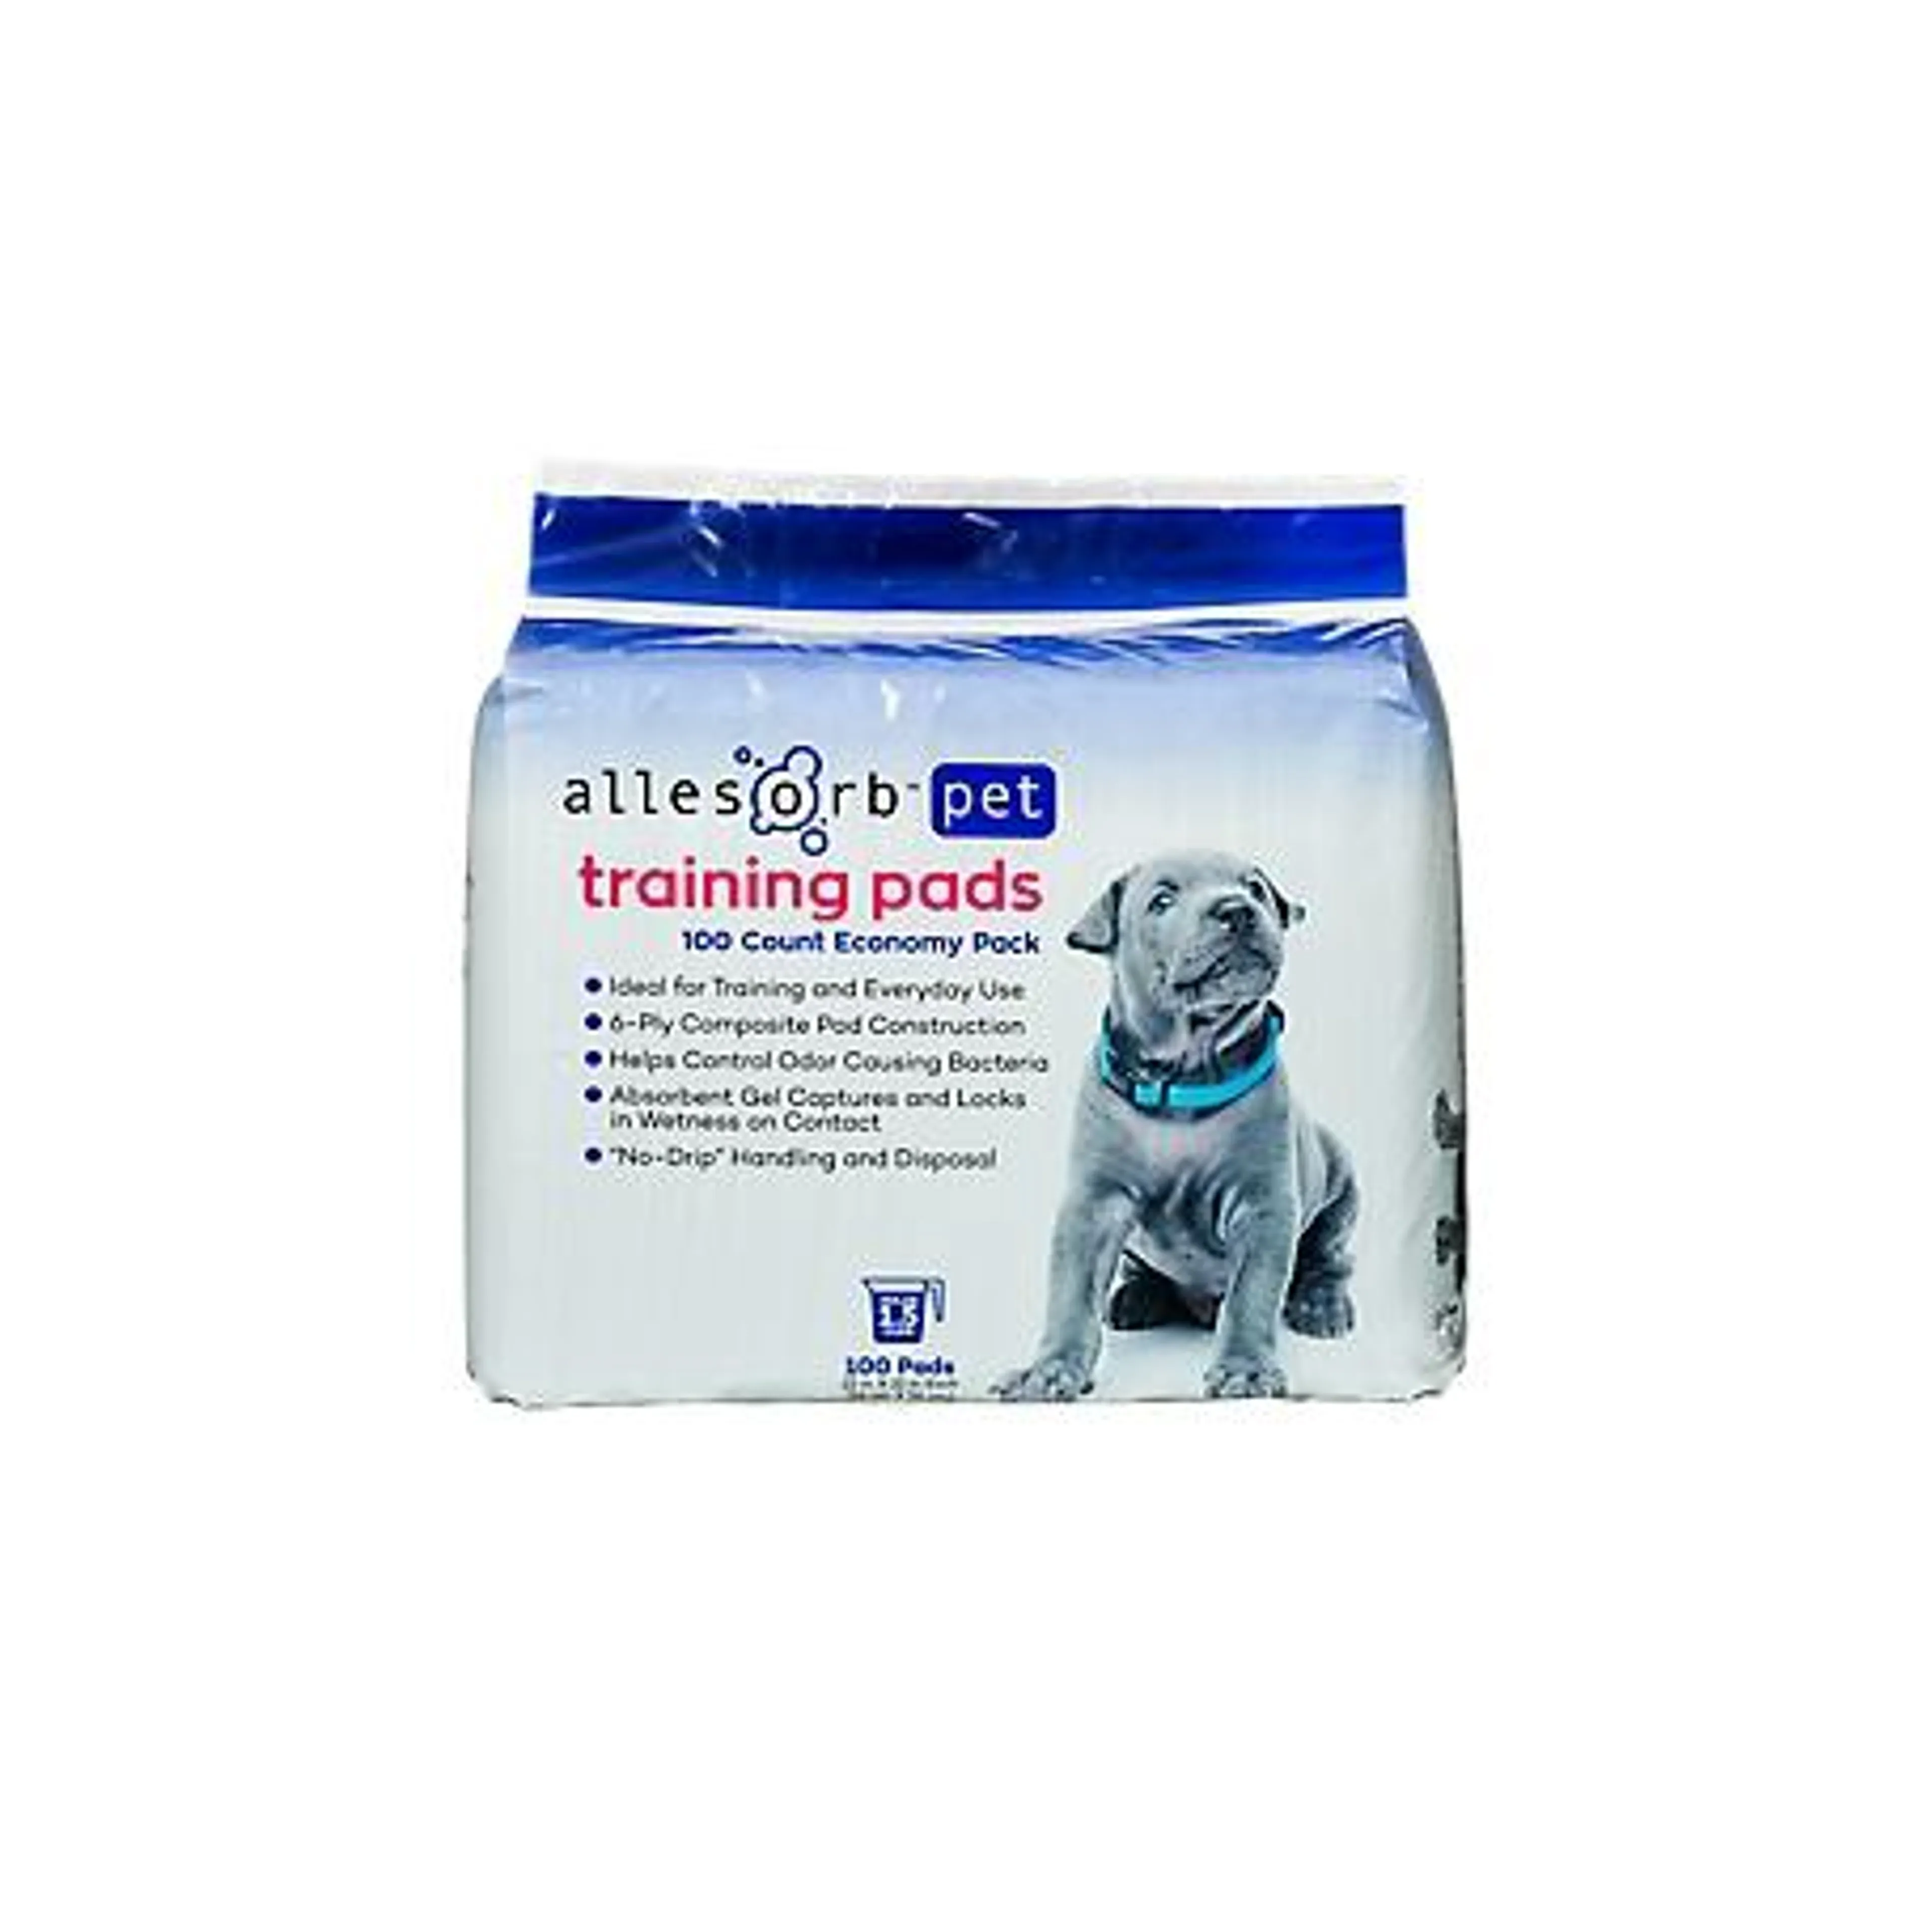 Allesorb Pet Training Pad 22"x22" - 100 count